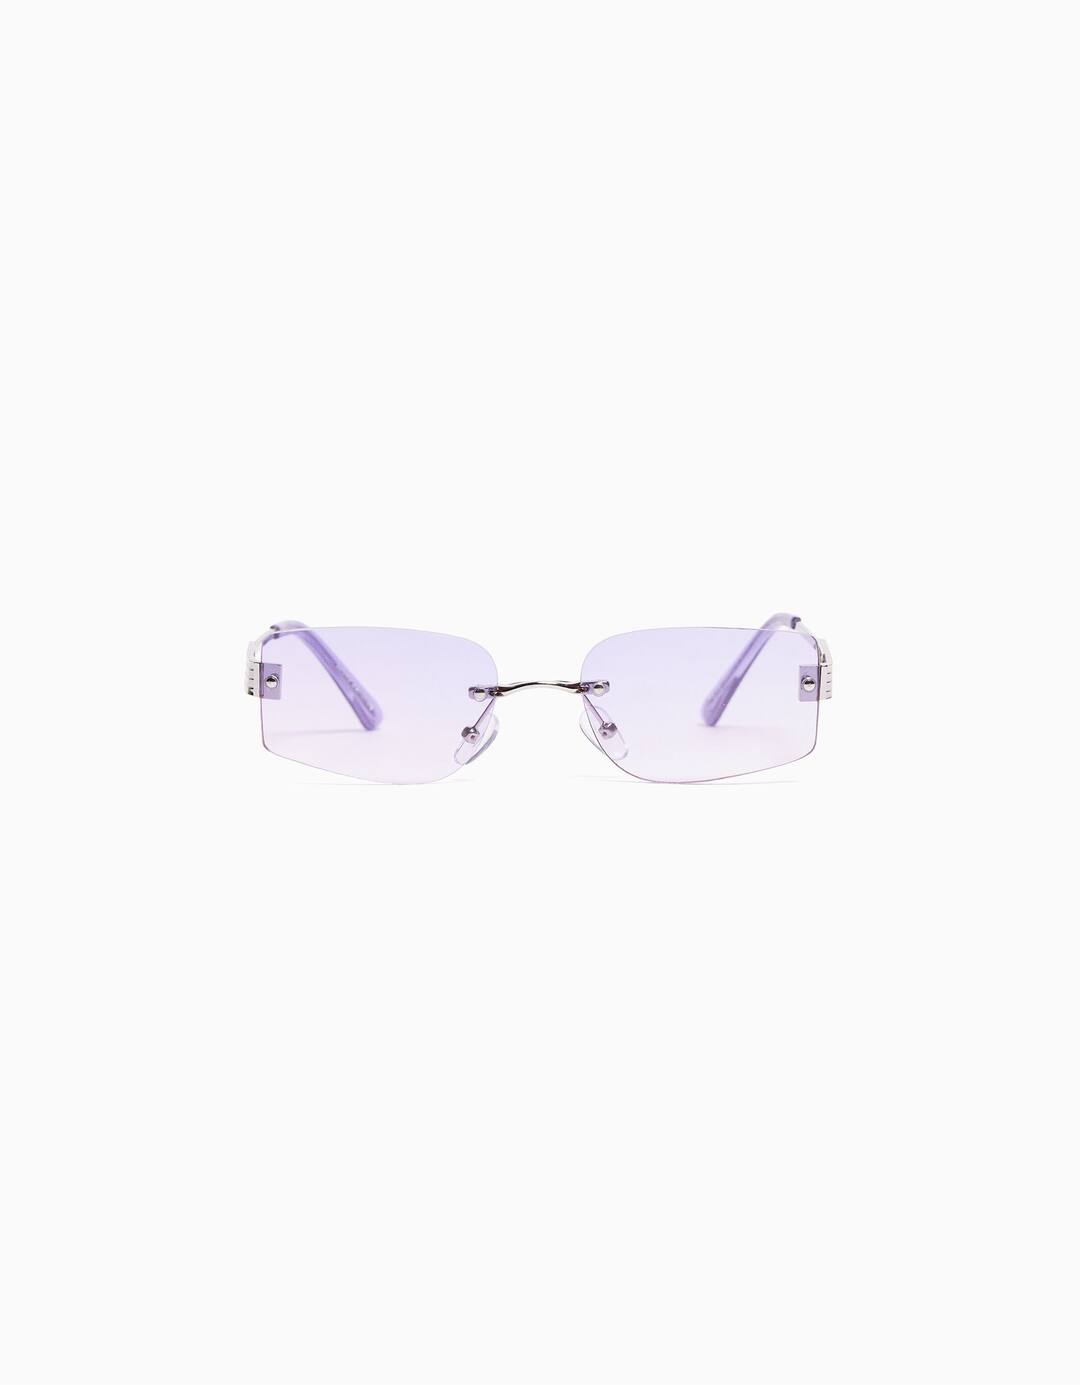 Frameless sunglasses with detail